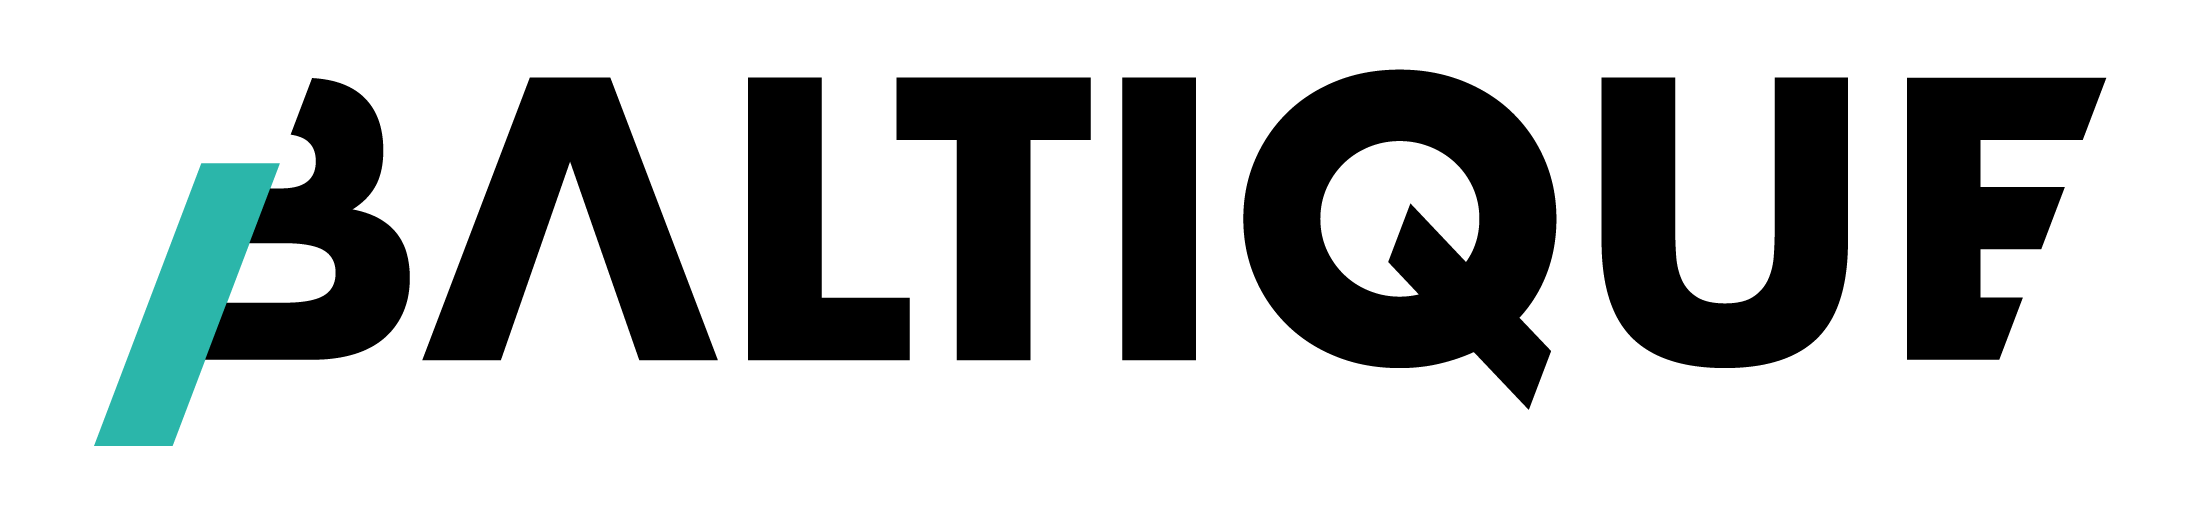 logo baltique photogravure